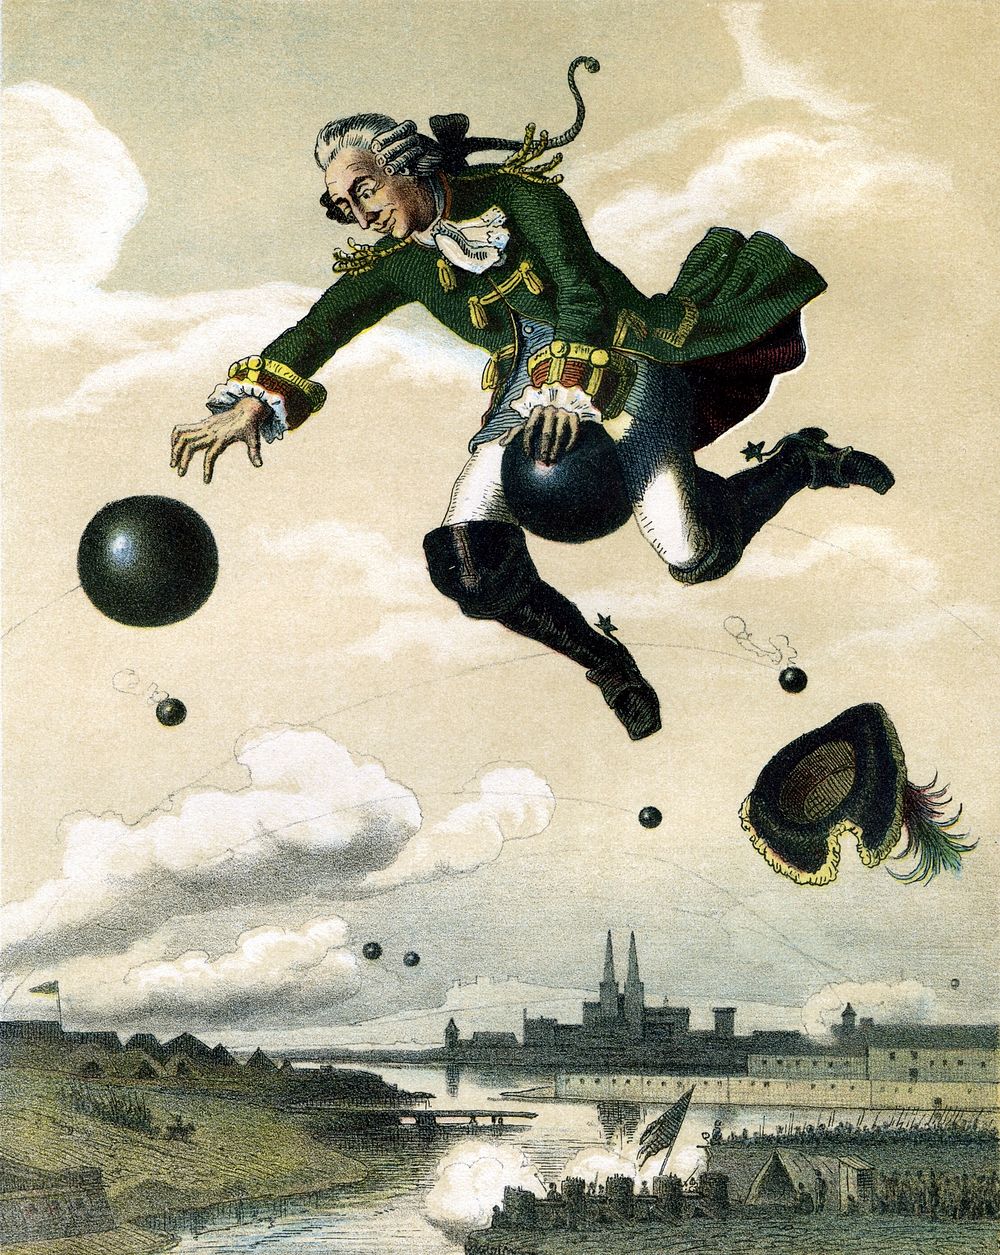 Baron von Münchhausen's flight on a cannonball.